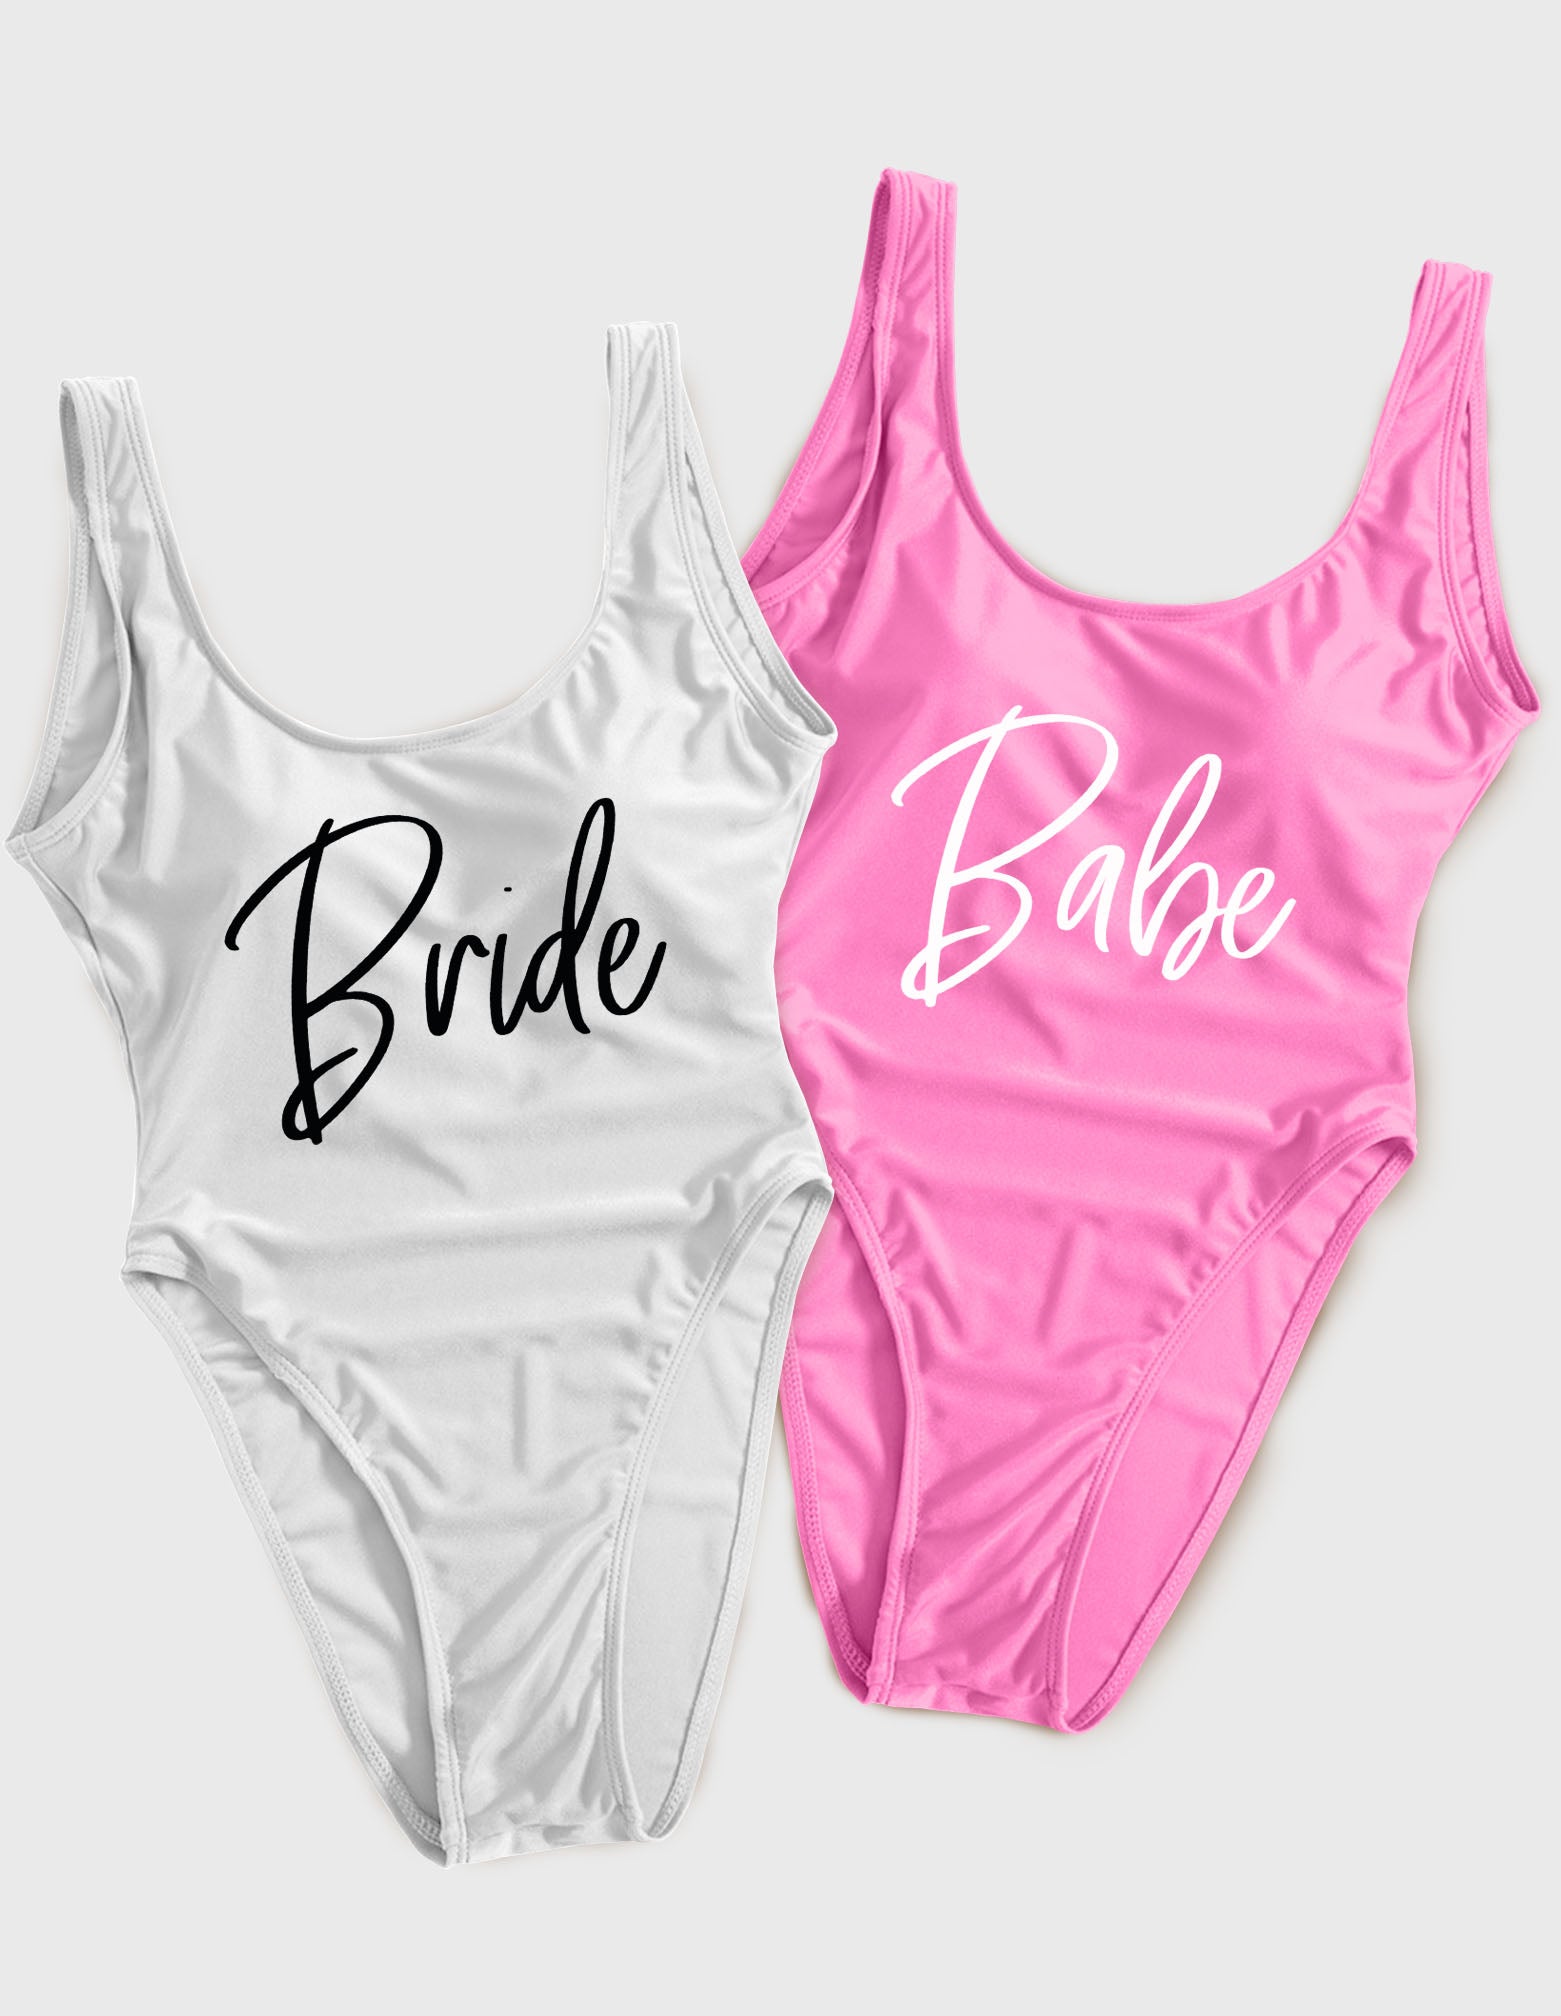 Bride (189) & Babe (192) Script Style Swimsuit